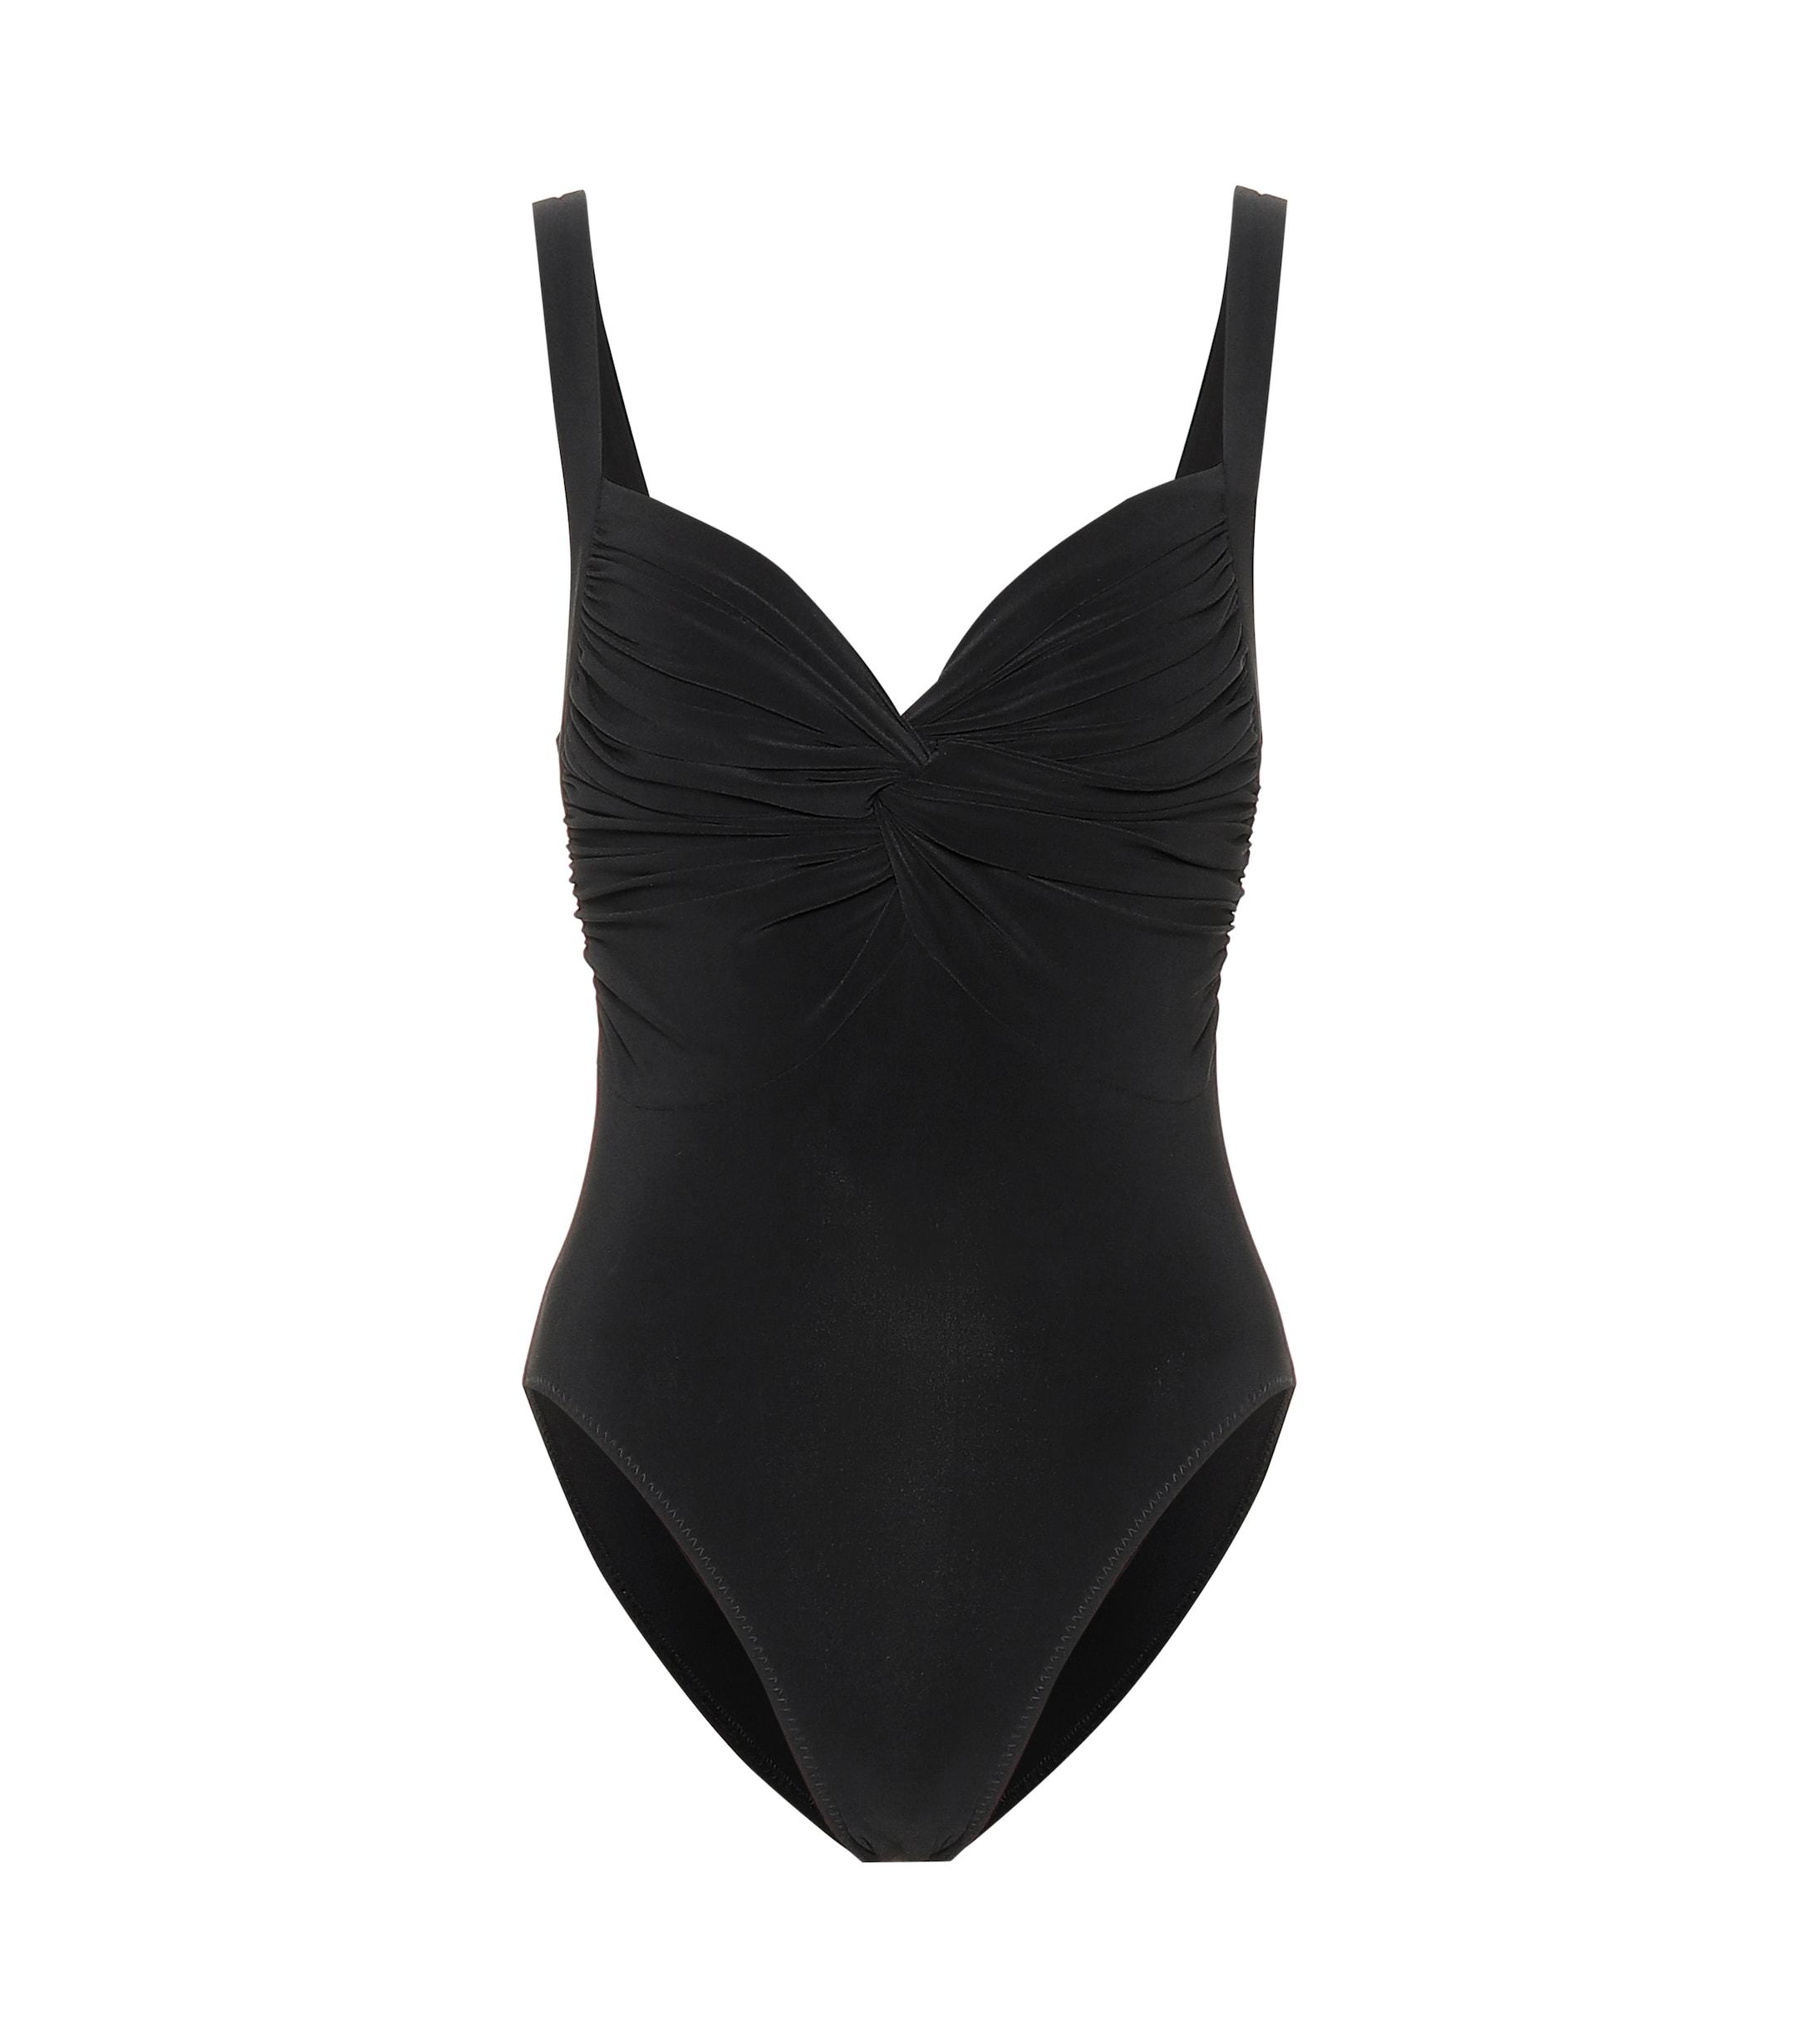 Norma Kamali Twist Mio One-piece Swimsuit in Black - Lyst